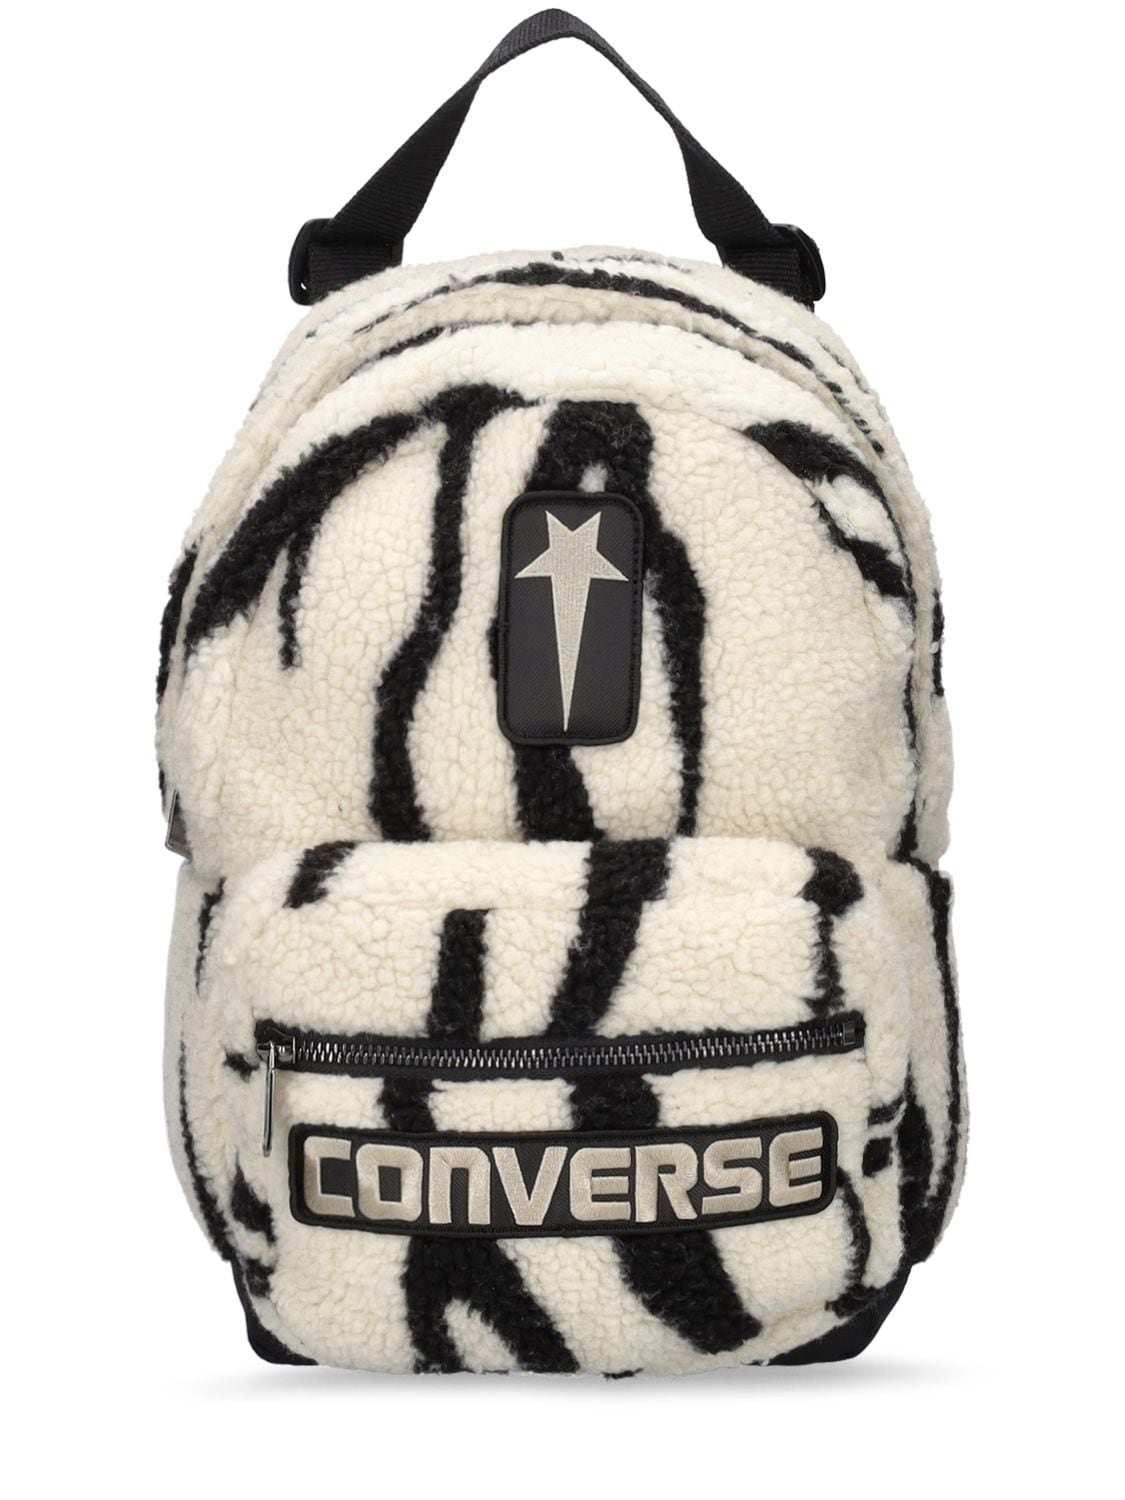 Converse Faux Shearling Zebra Backpack - DRKSHDW X CONVERSE - Modalova